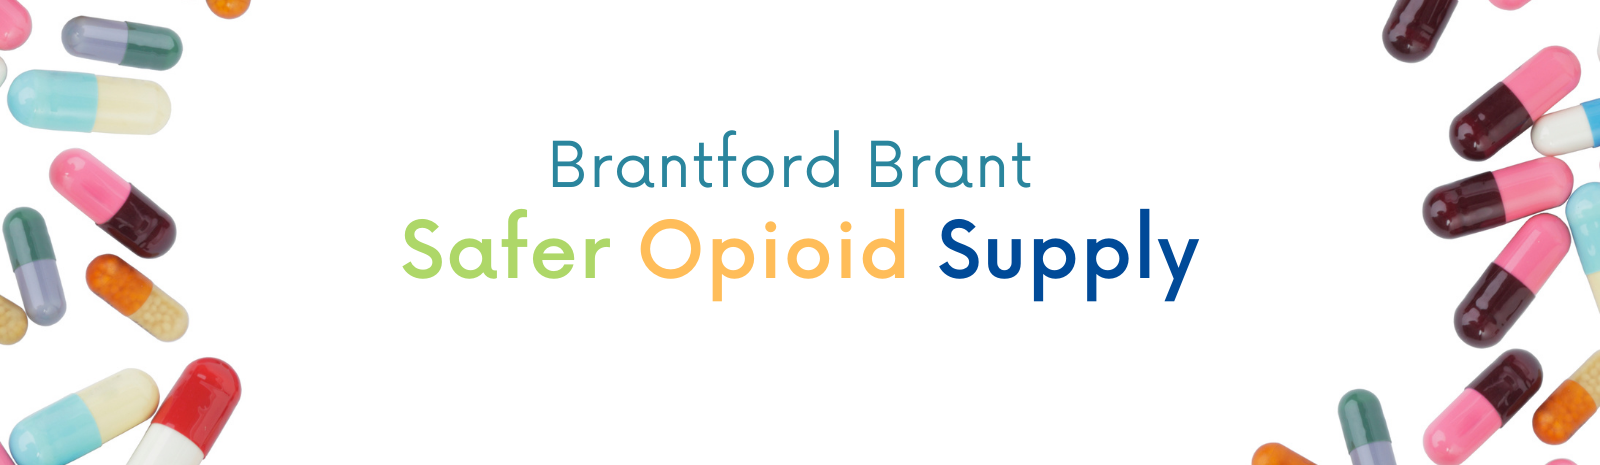 Safer Opioid Supply program banner